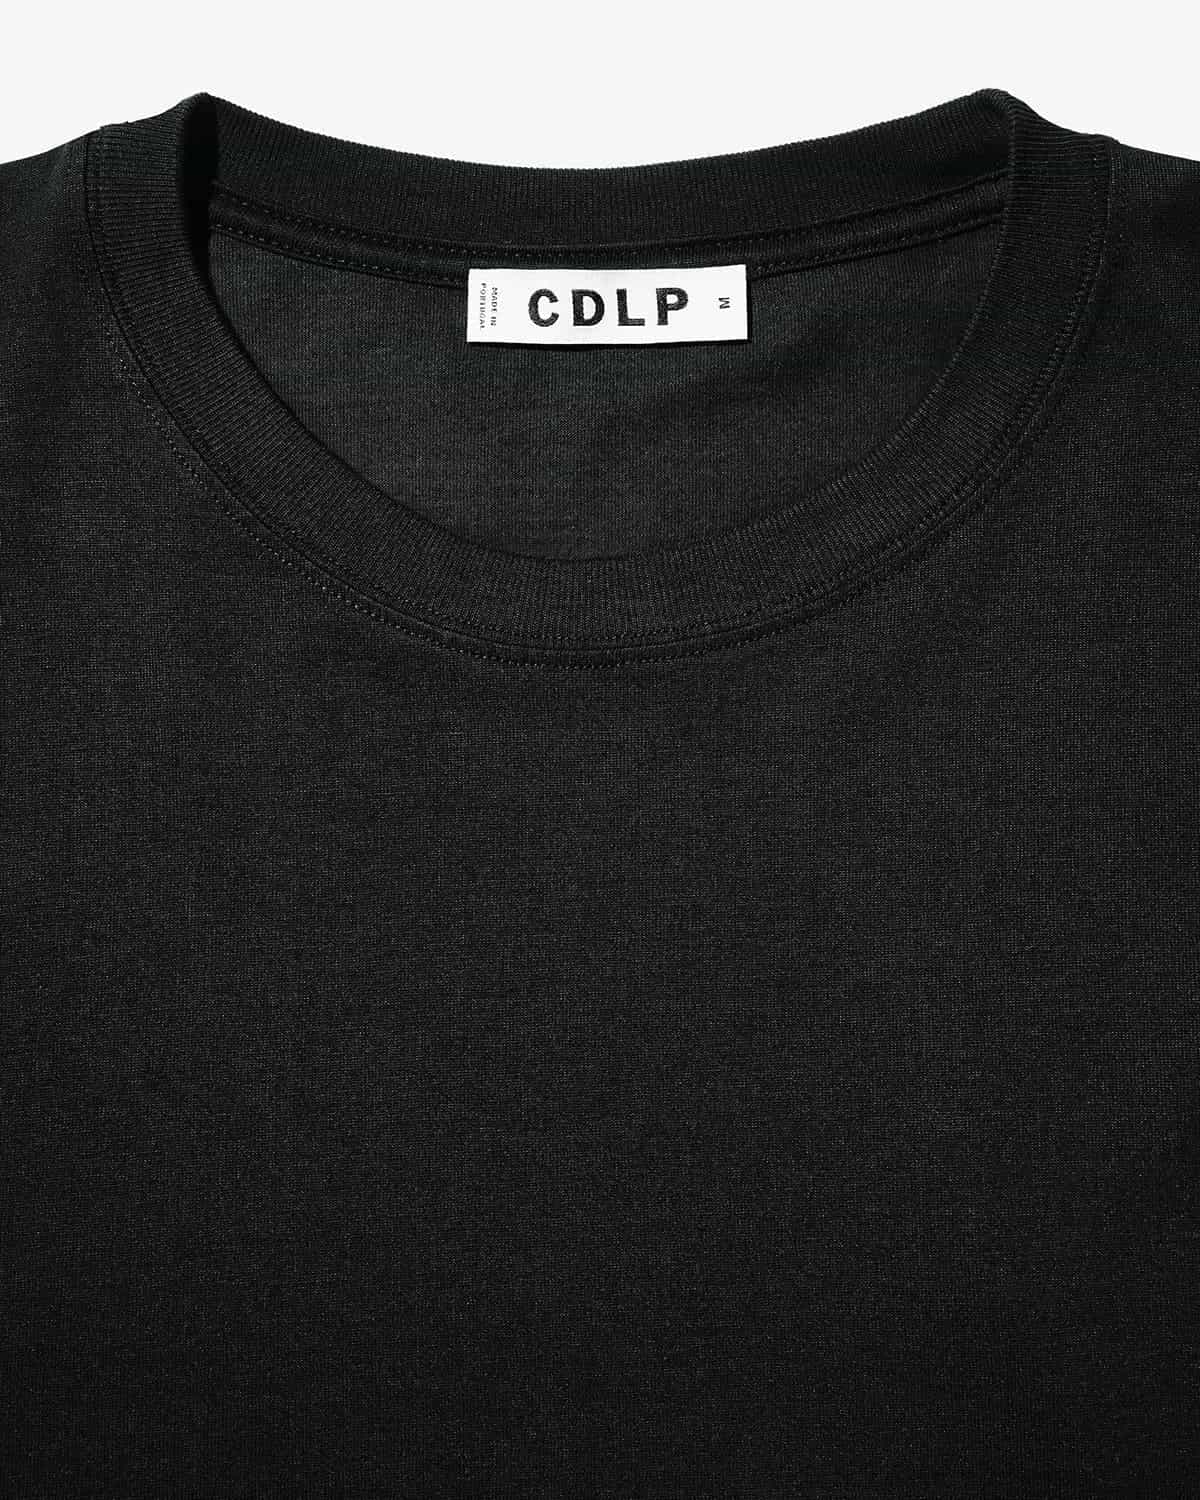 CDLP Midweight Long Sleeve T-Shirt in Black